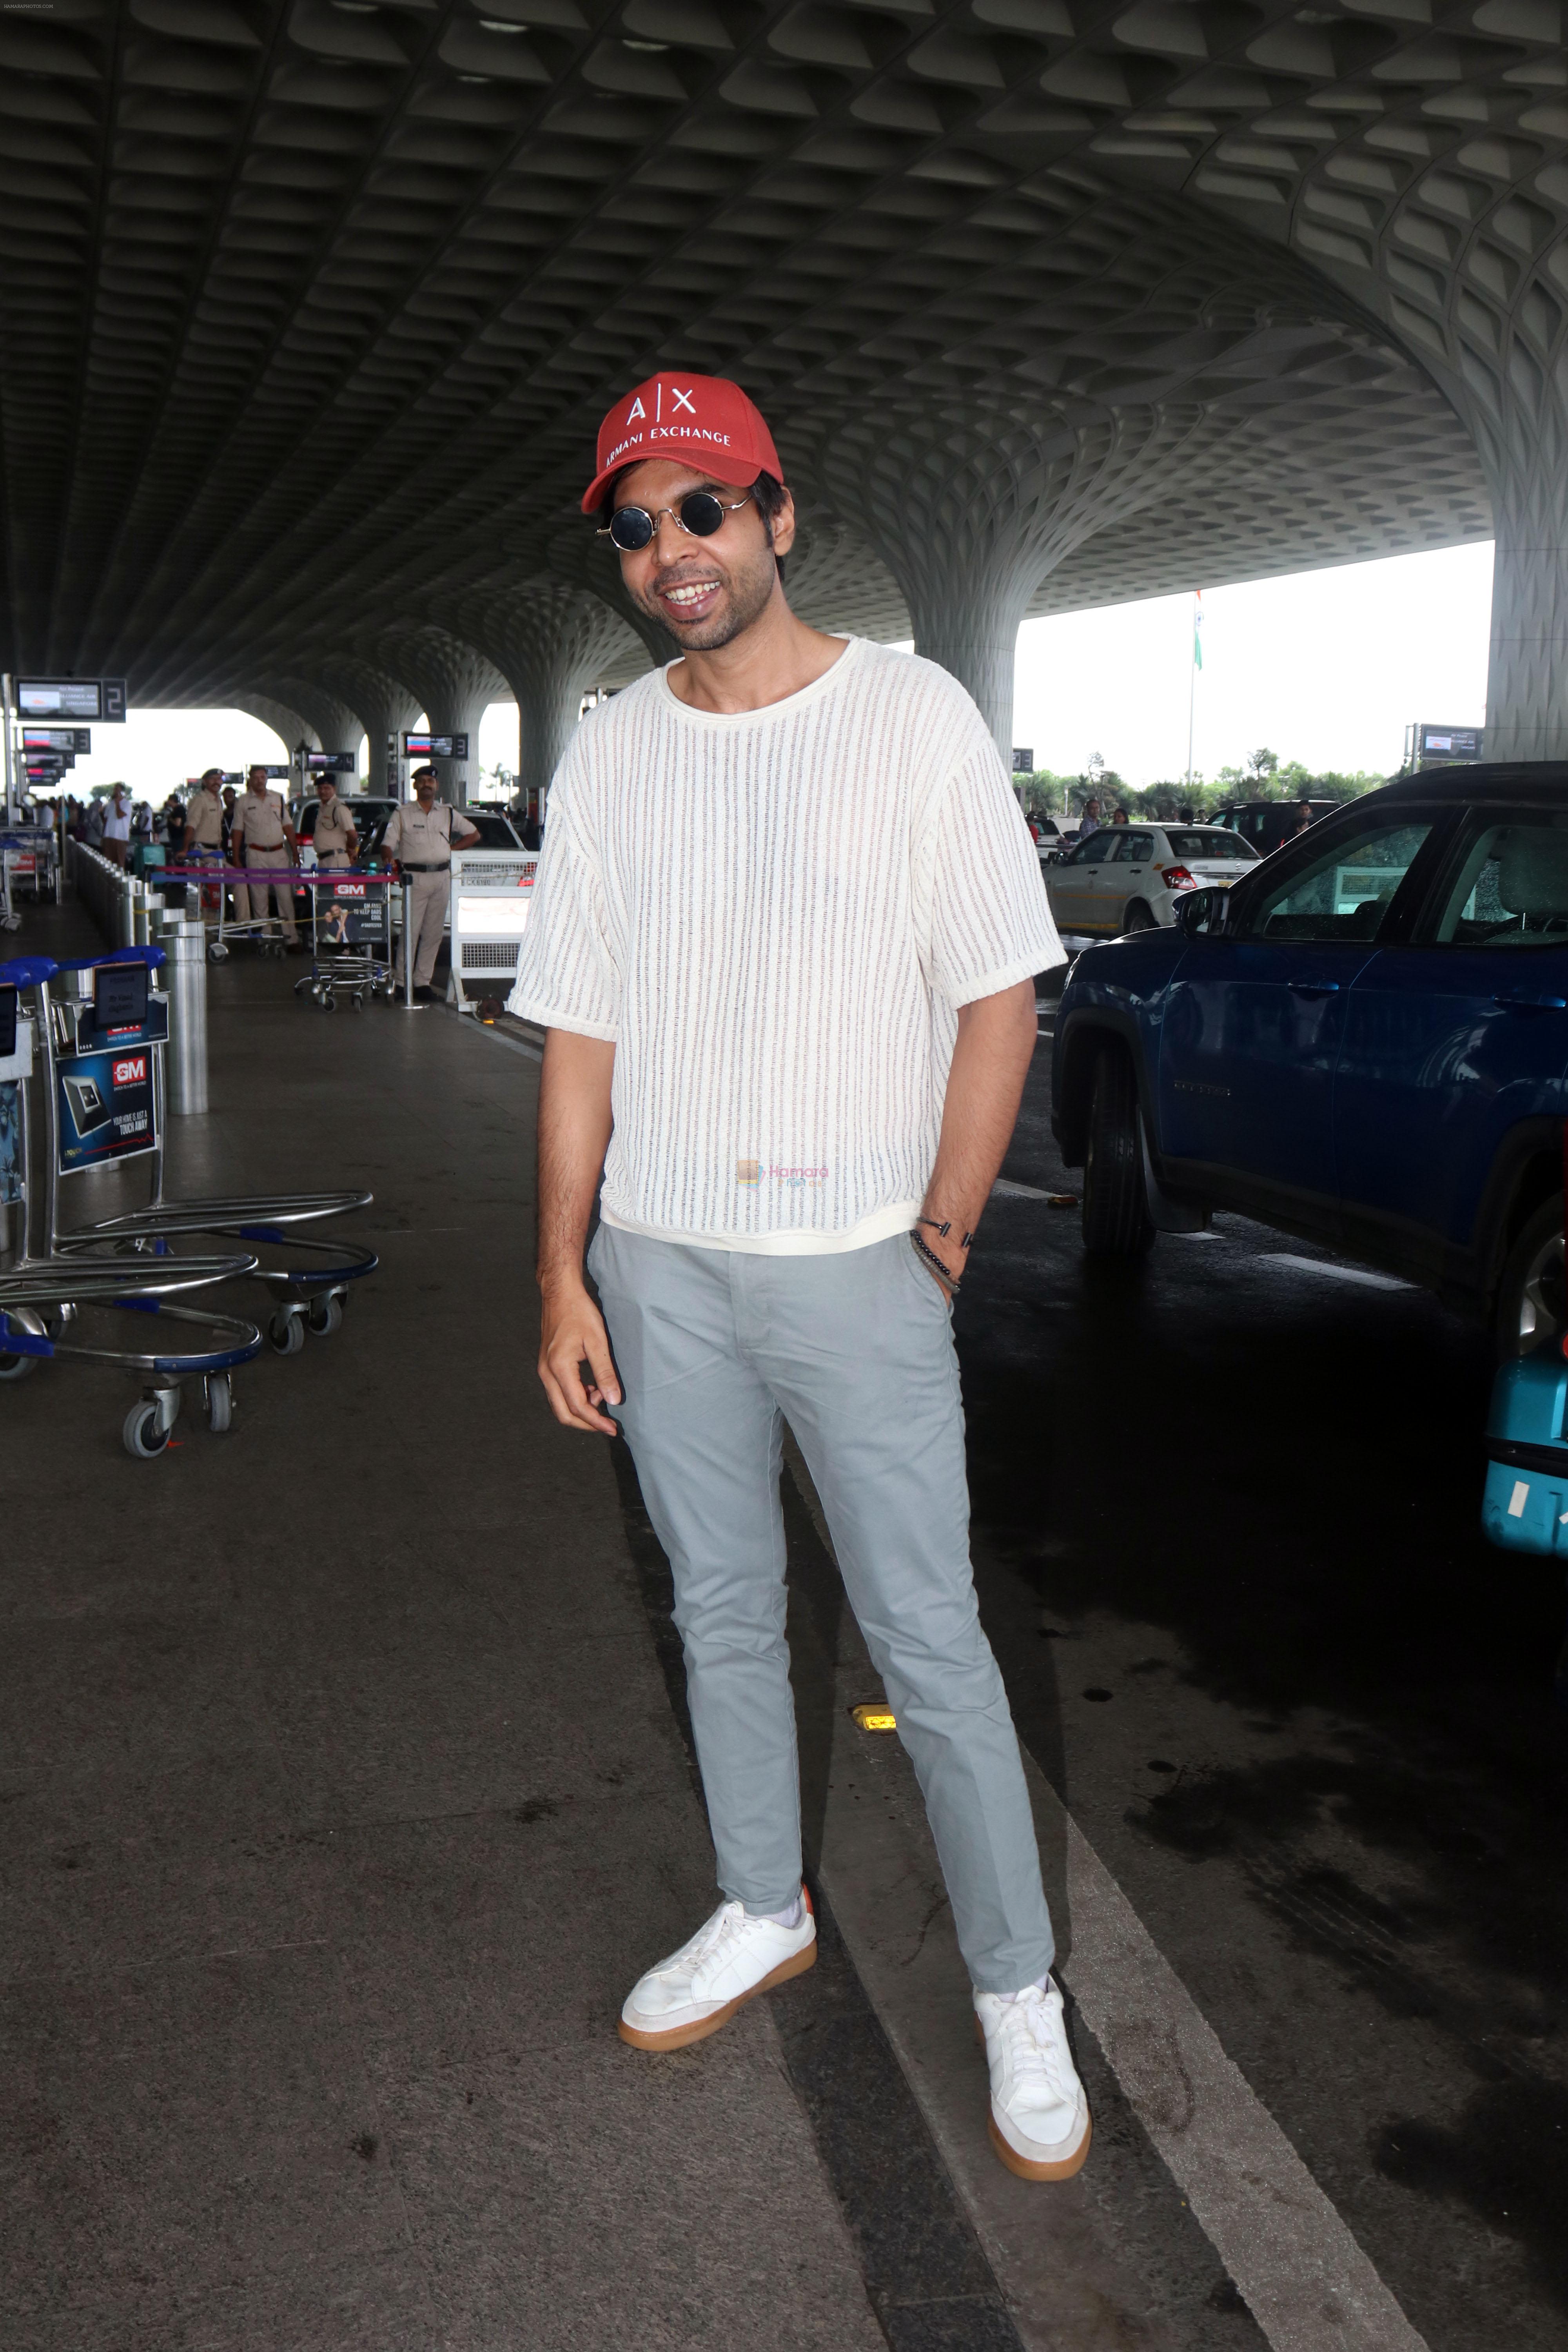 Abhishek Banerjee wearing Armani Exchange red cap seen at the airport on 1 July 2023